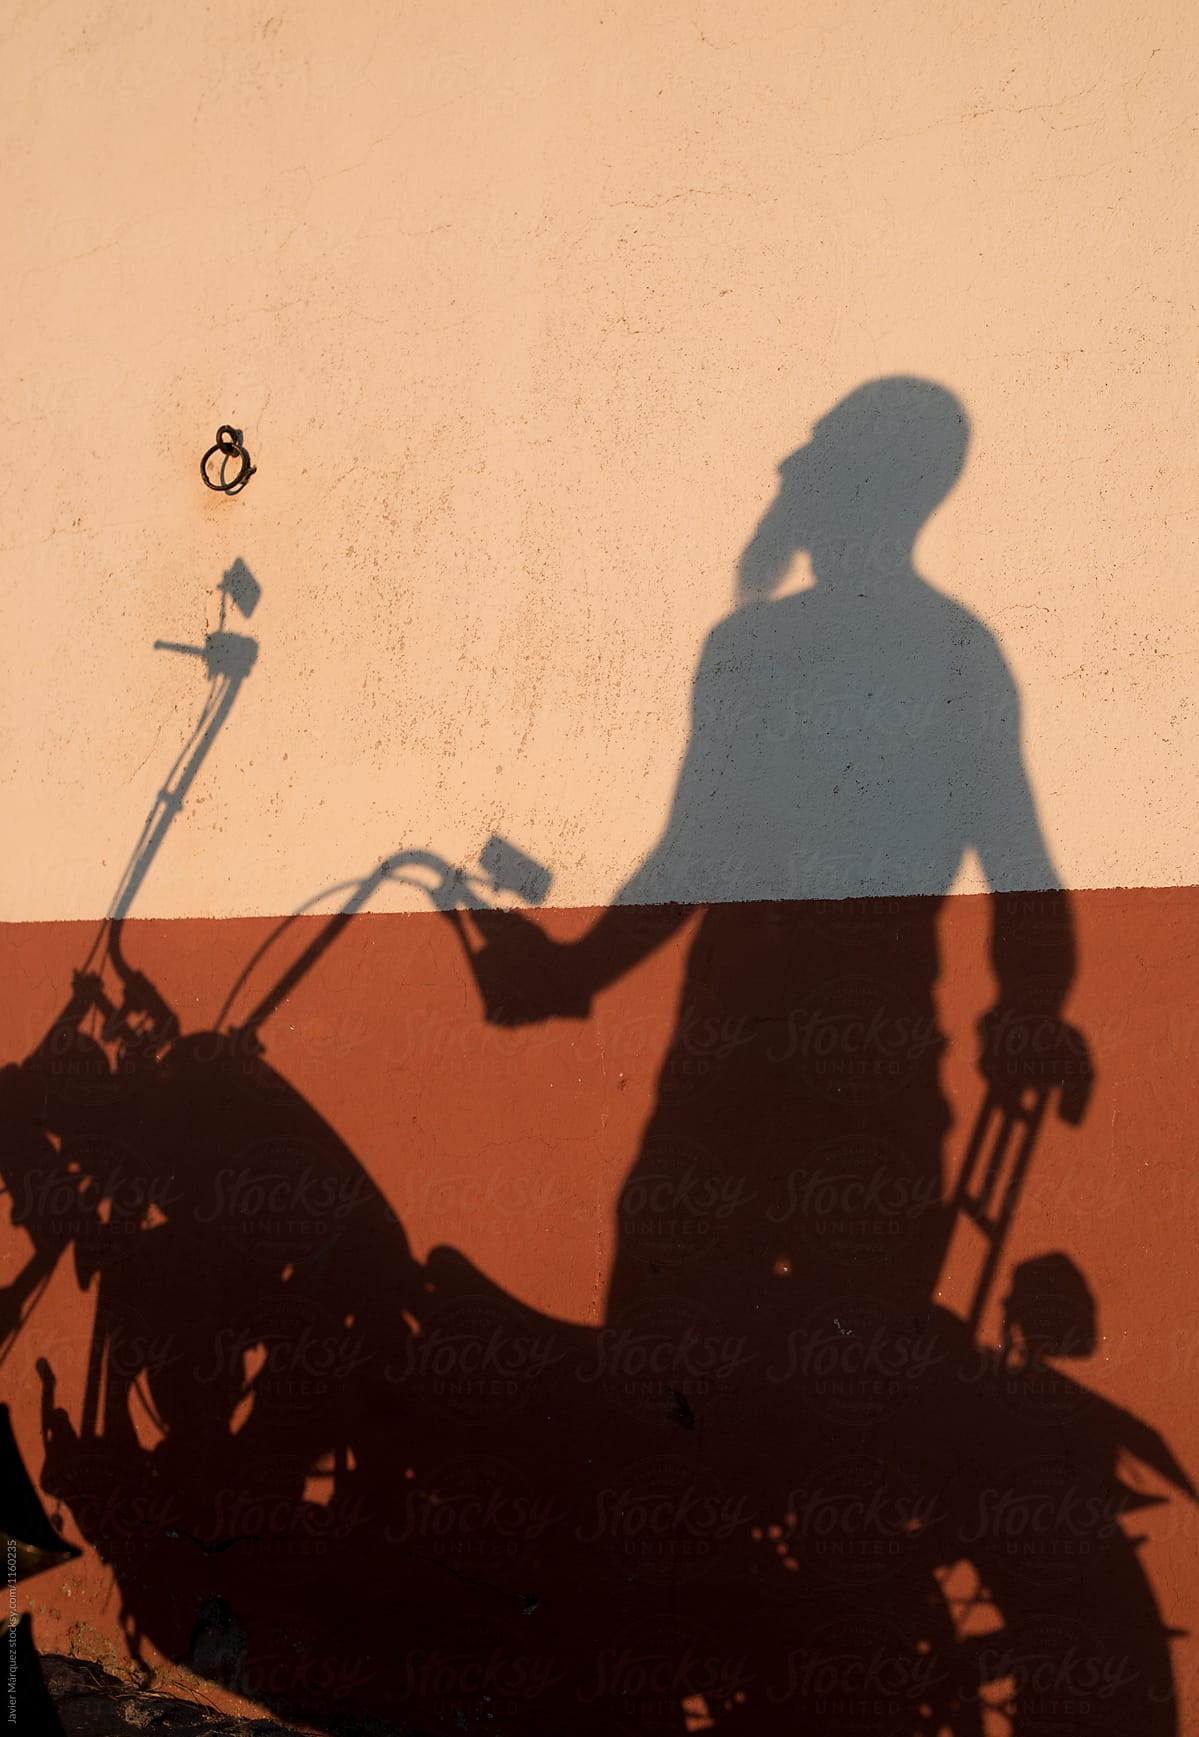 Shadow of a motorcyclist aged man